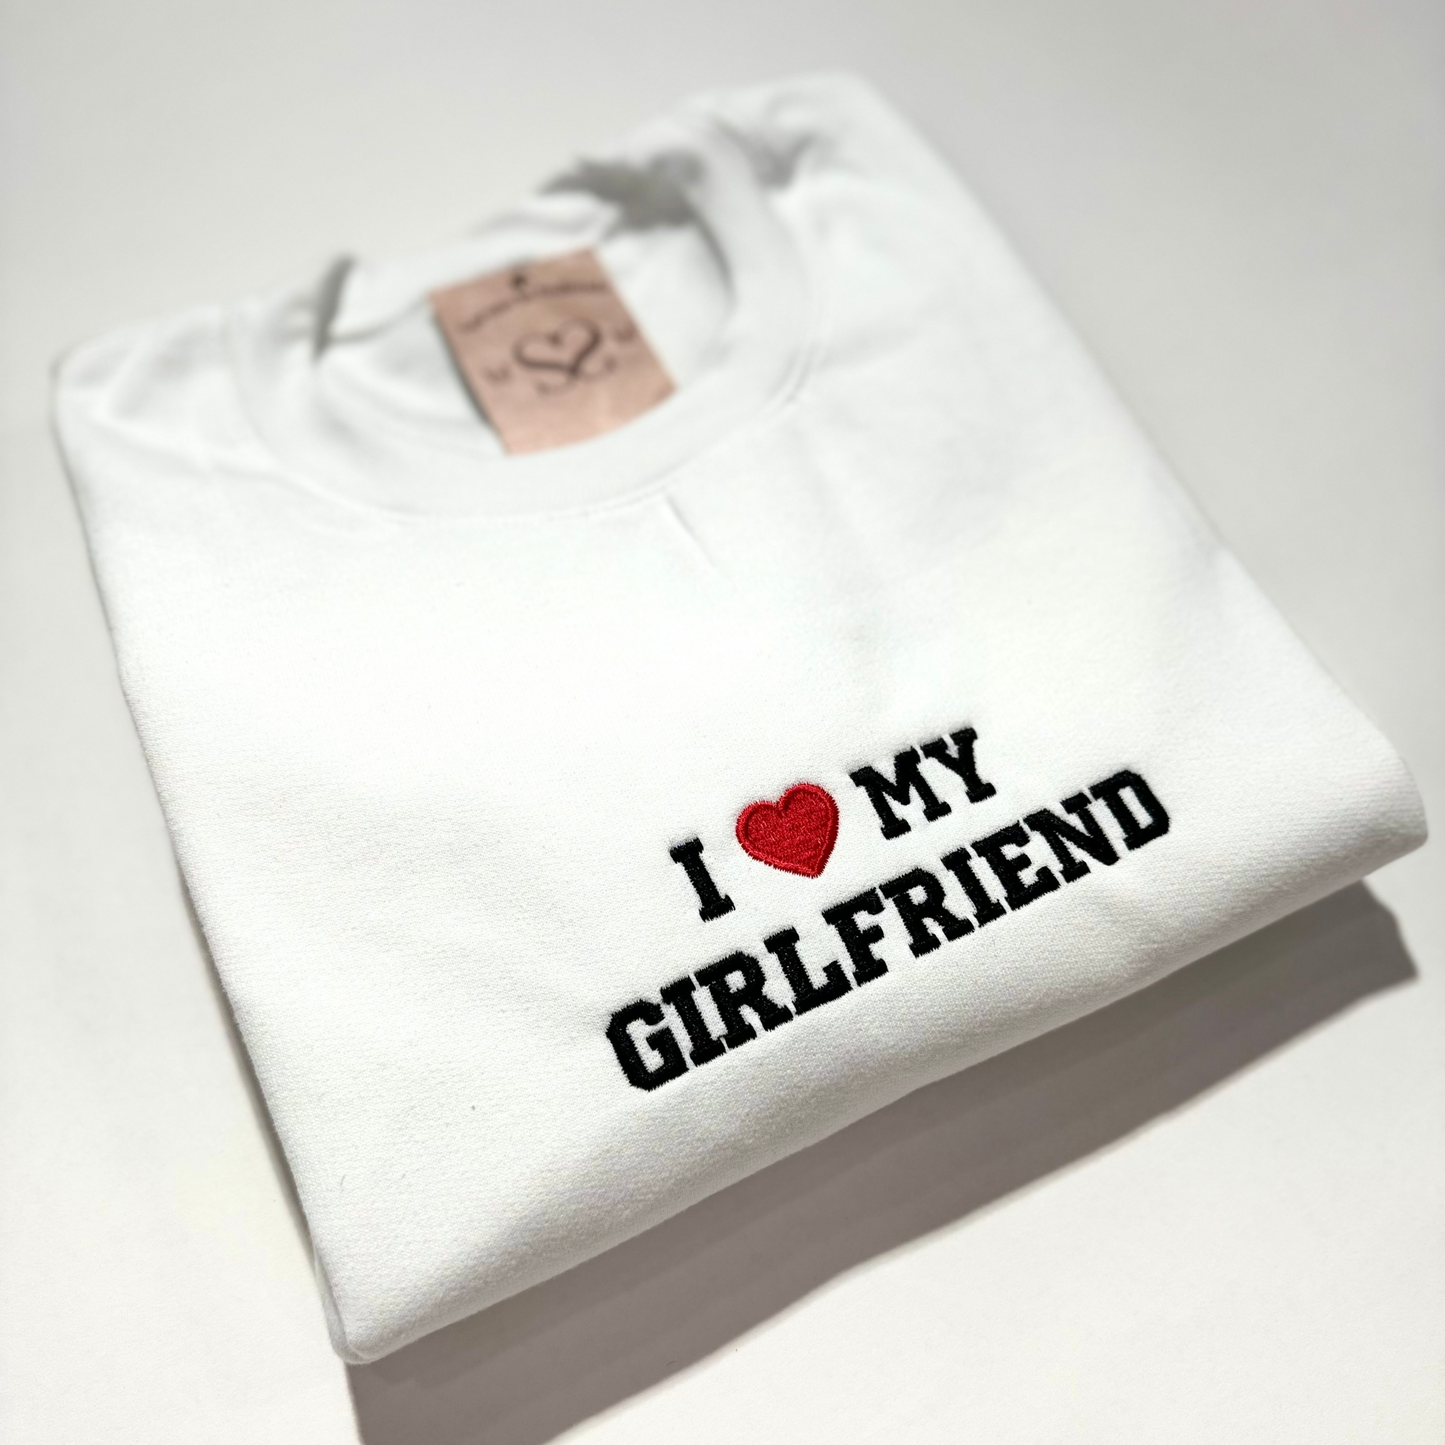 Embroidered I Love My Girlfriend Sweatshirt